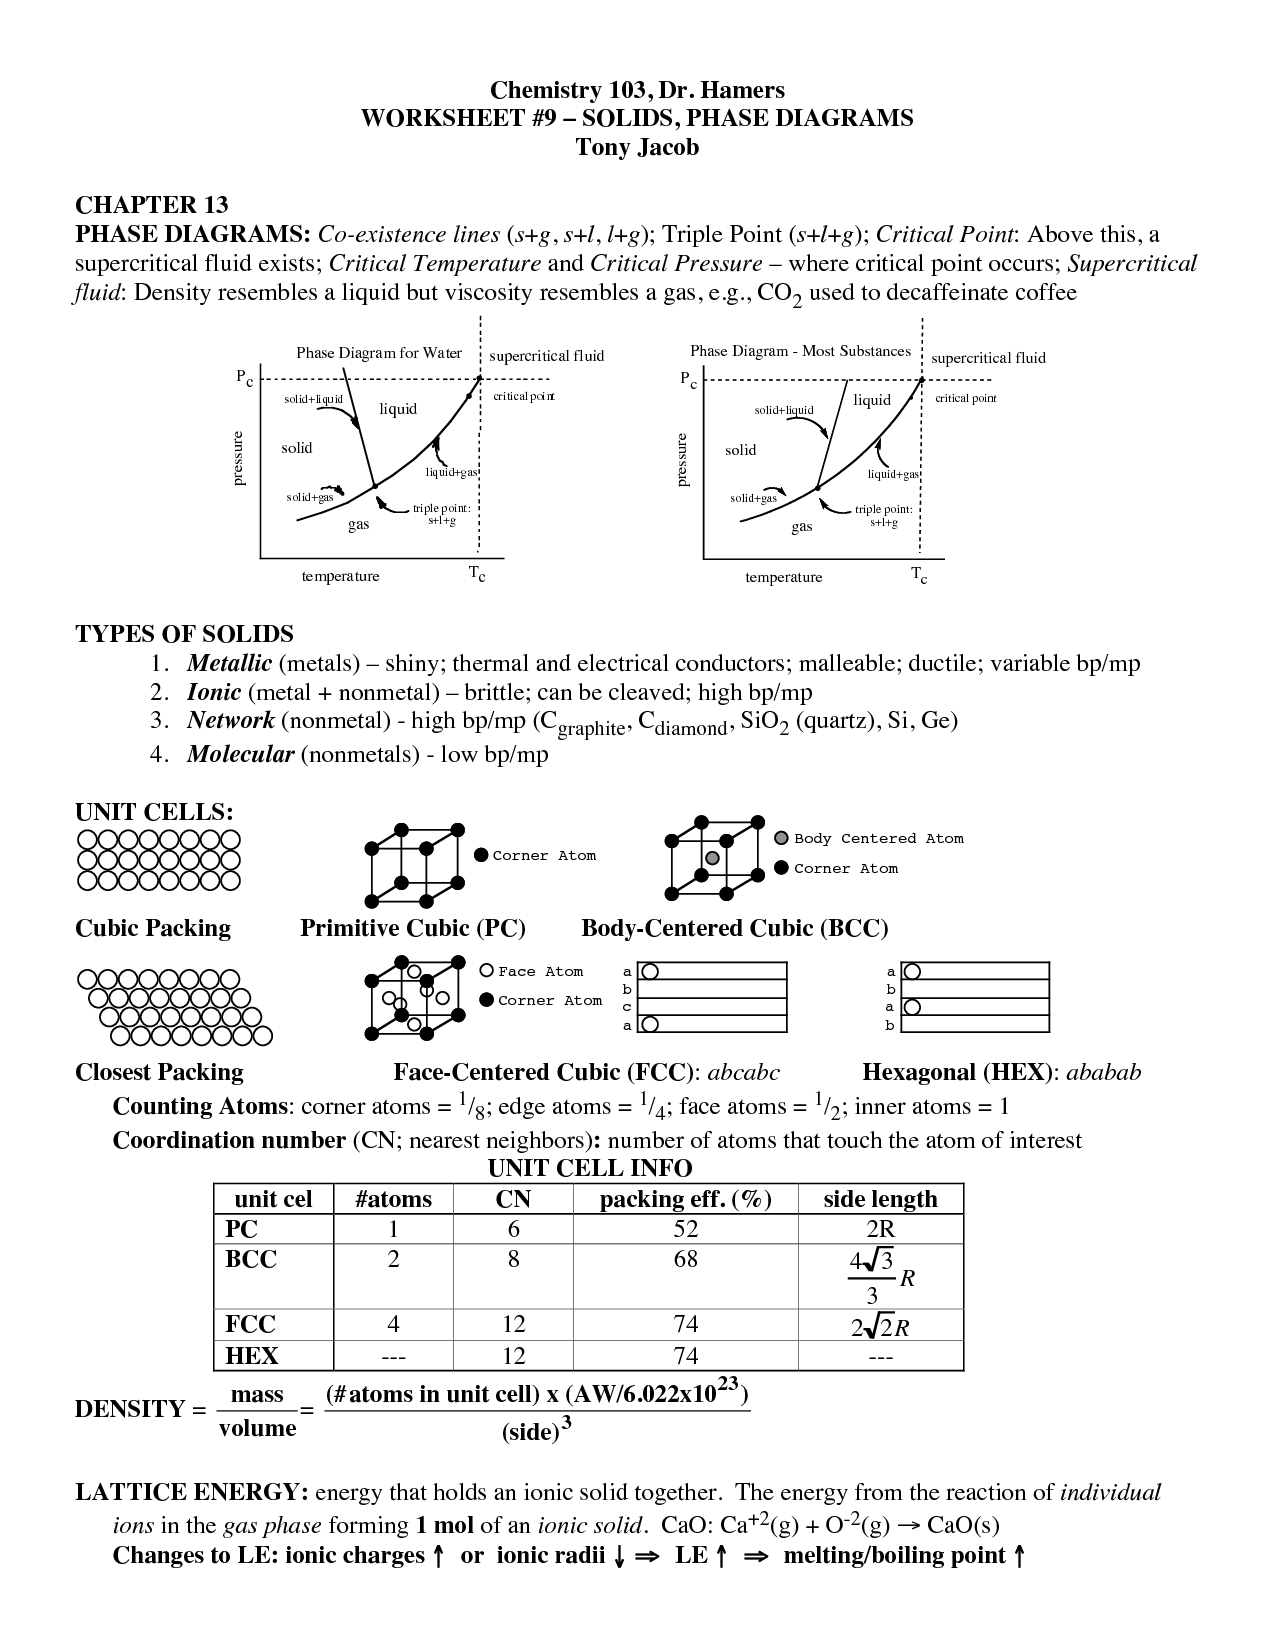 Chemistry Phase Diagram Worksheet Image